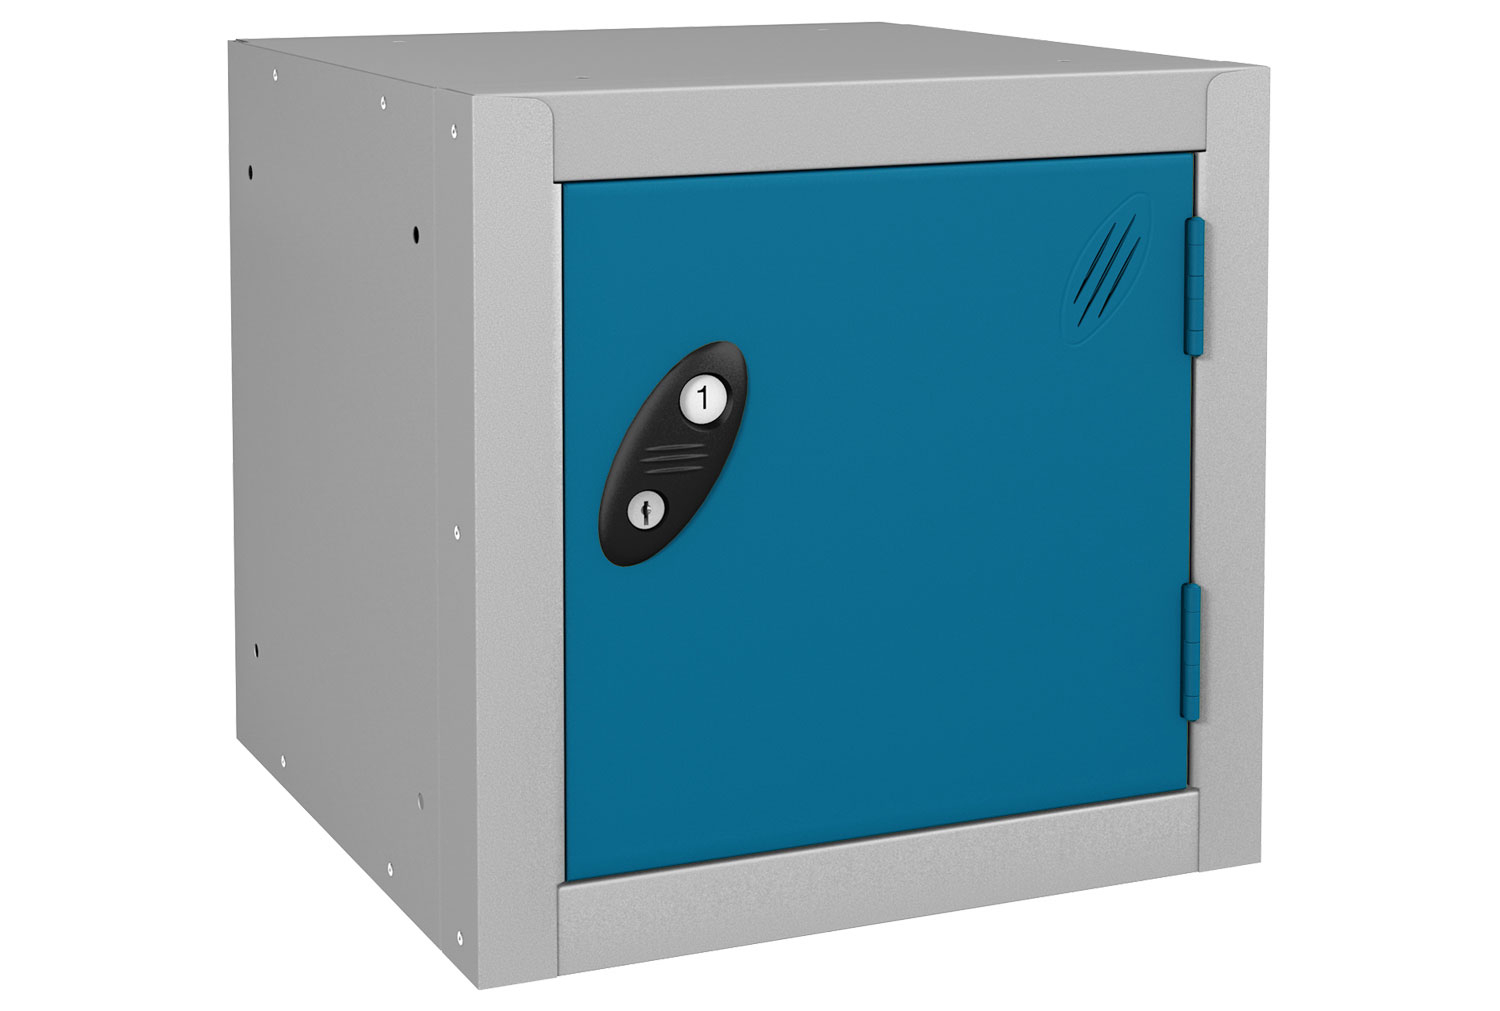 Probe Cube Lockers, 38wx38dx38h (cm), Cam Lock, Silver Body, Blue